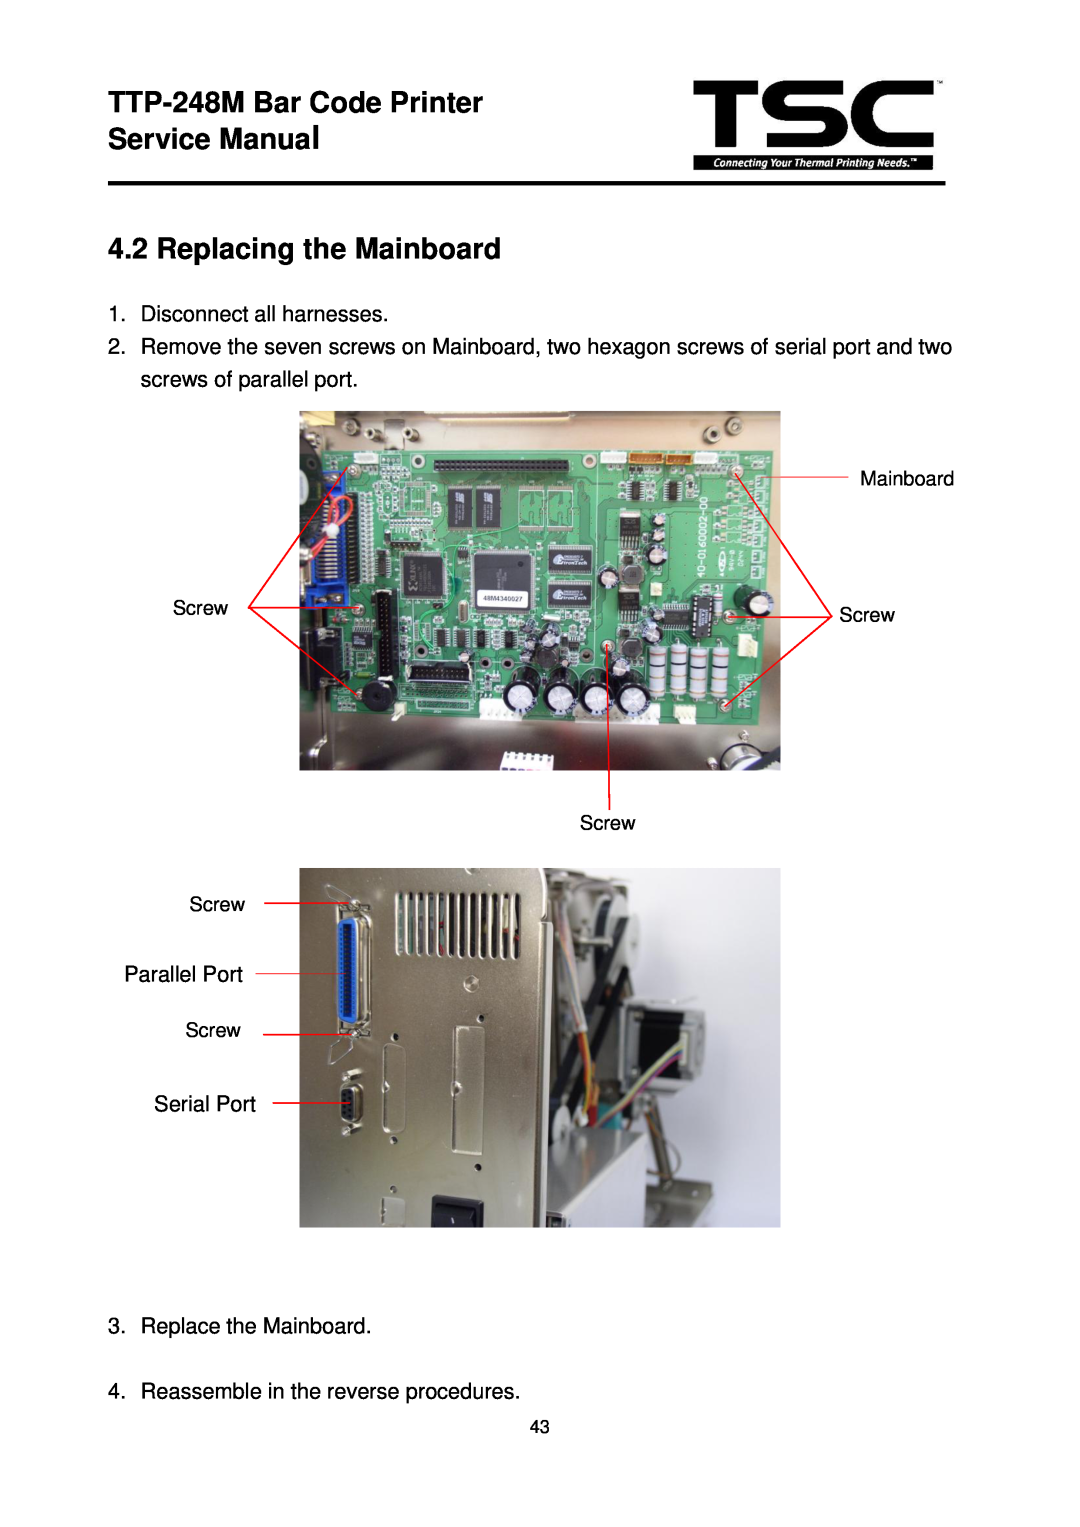 The Speaker Company TTP 248M service manual TTP-248M Bar Code Printer Service Manual 4.2 Replacing the Mainboard, Screw 